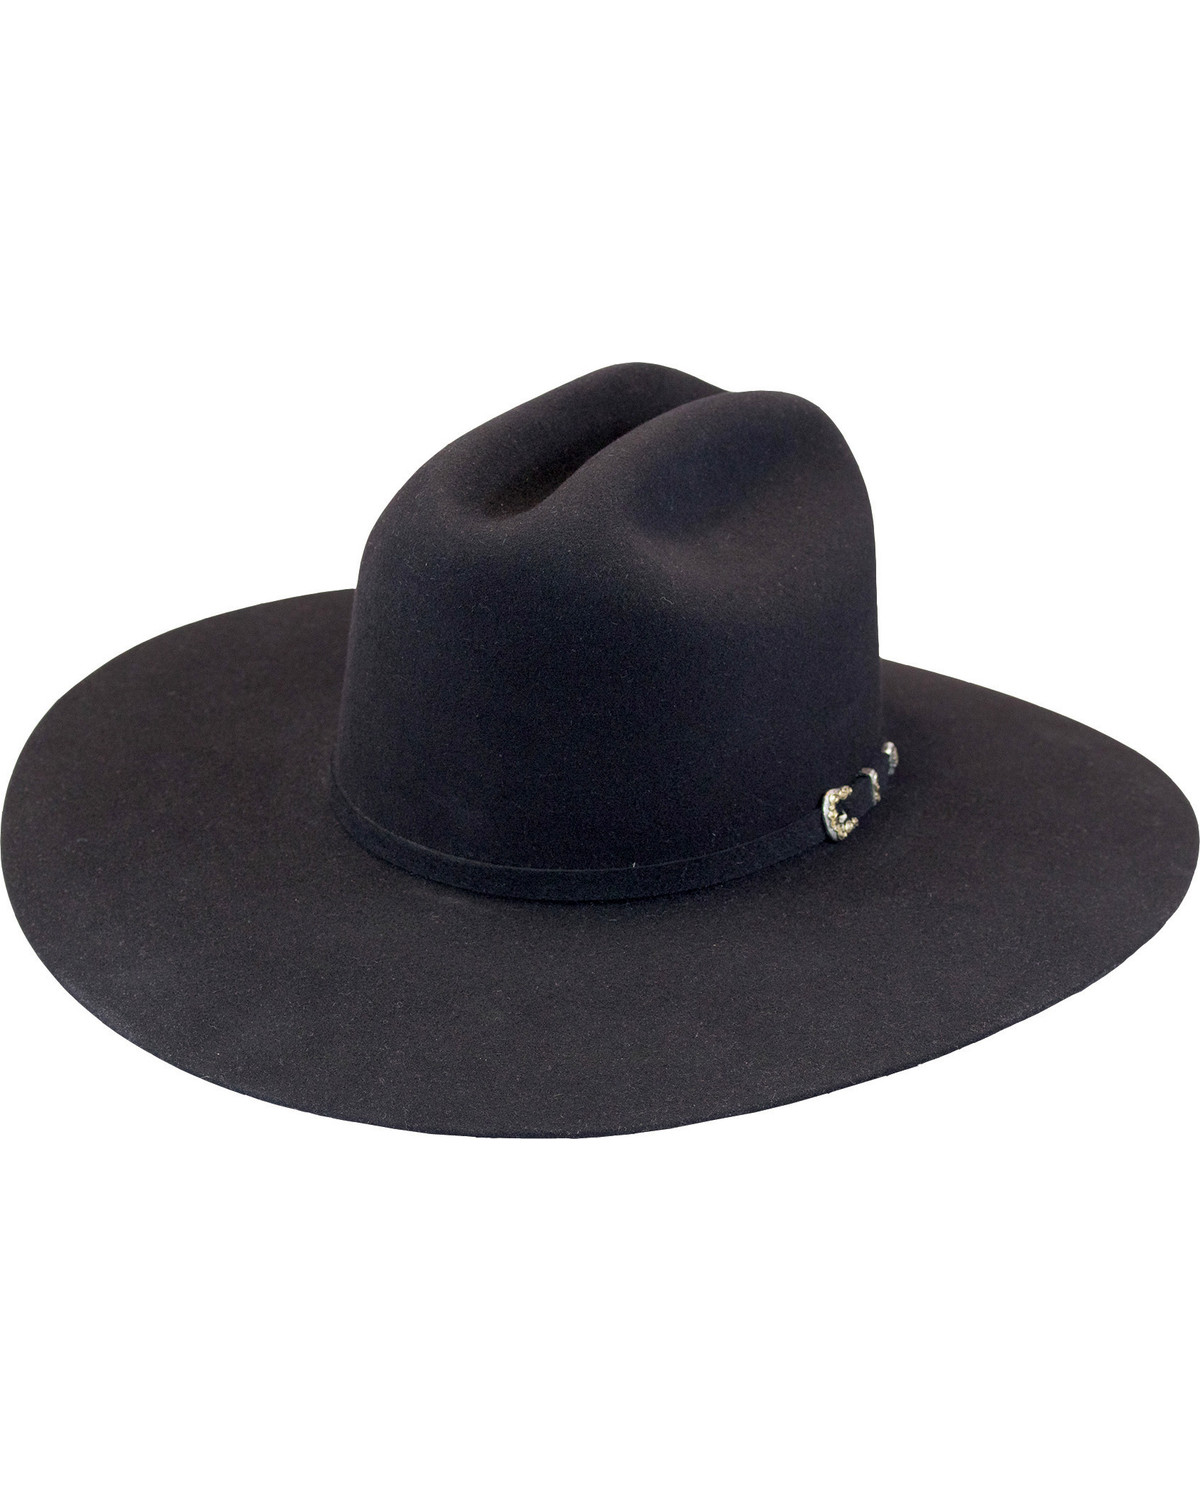 Justin Men's Newman 15X Felt Western Fashion Hat